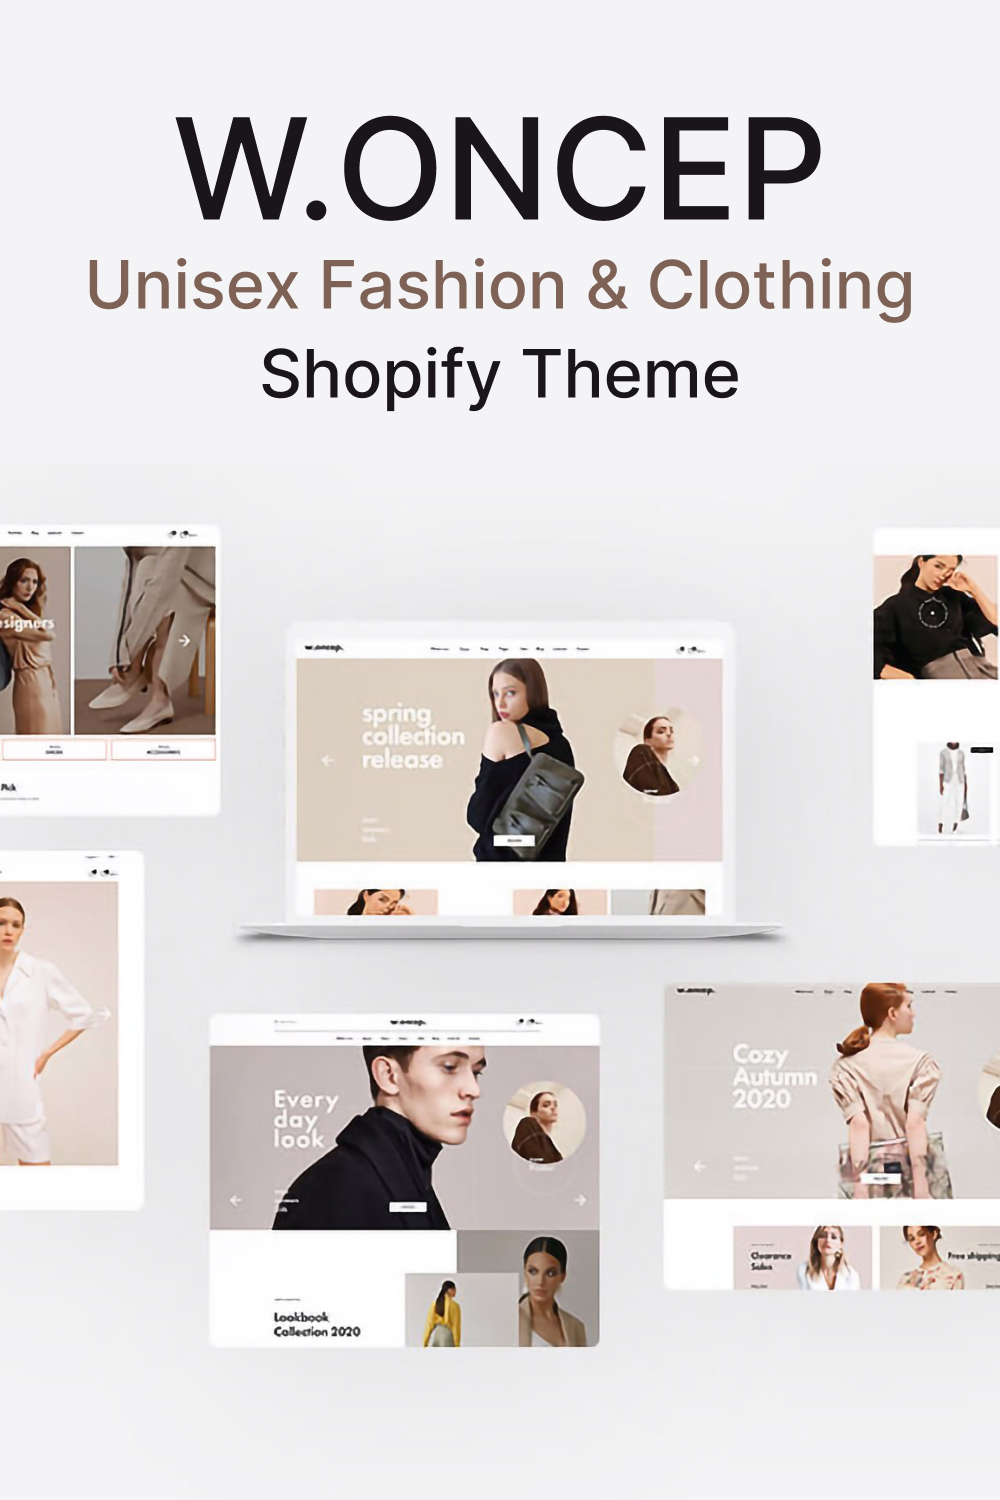 W.Oncep - Unisex Fashion & Clothing Shopify Theme - Pinterest.